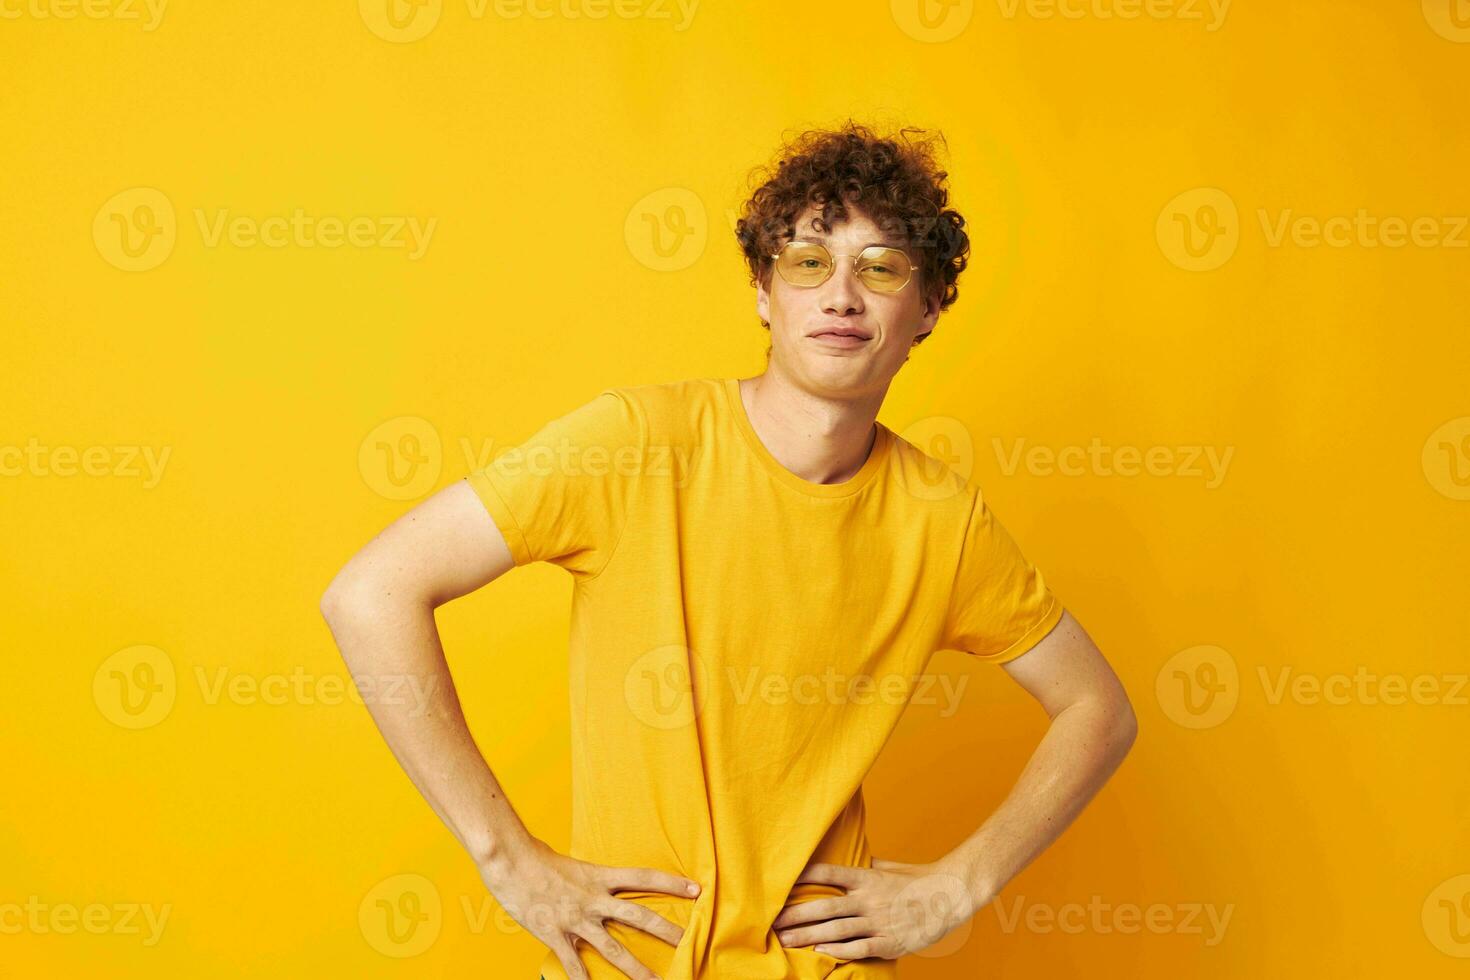 schattig roodharig vent vervelend elegant bril geel t-shirt poseren geel achtergrond ongewijzigd foto